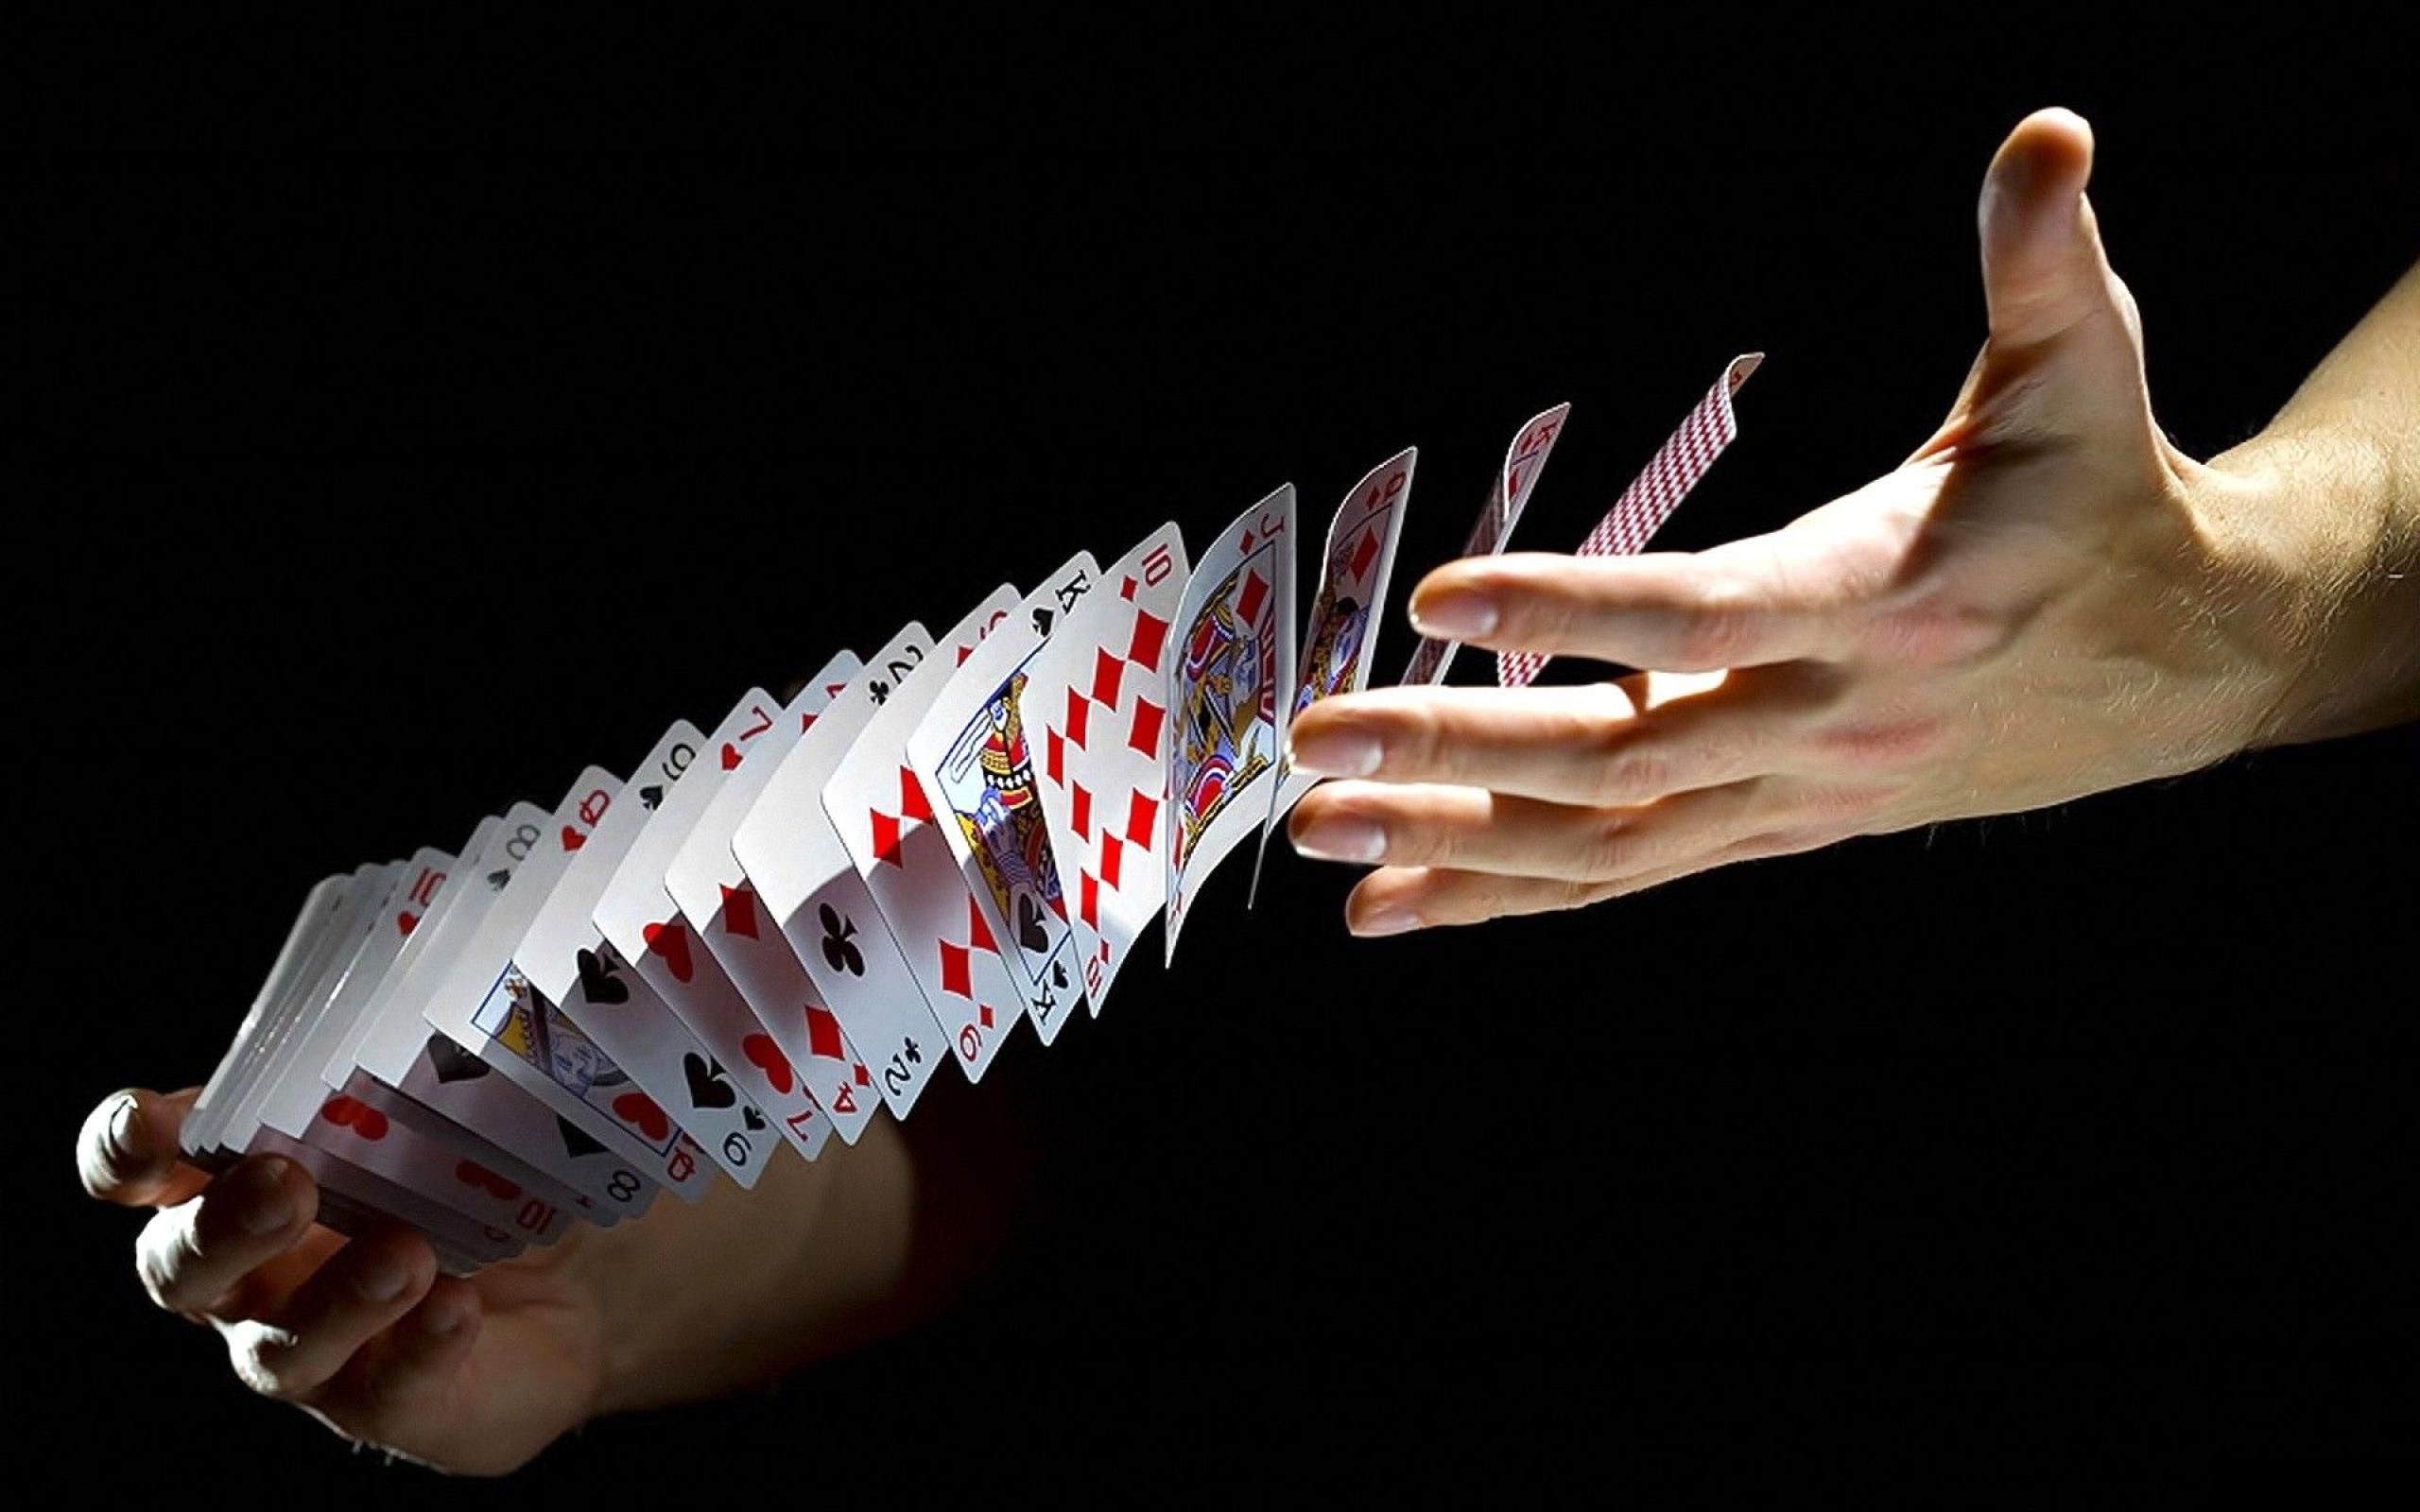 Playing Card Image Palying Cards Poker Design